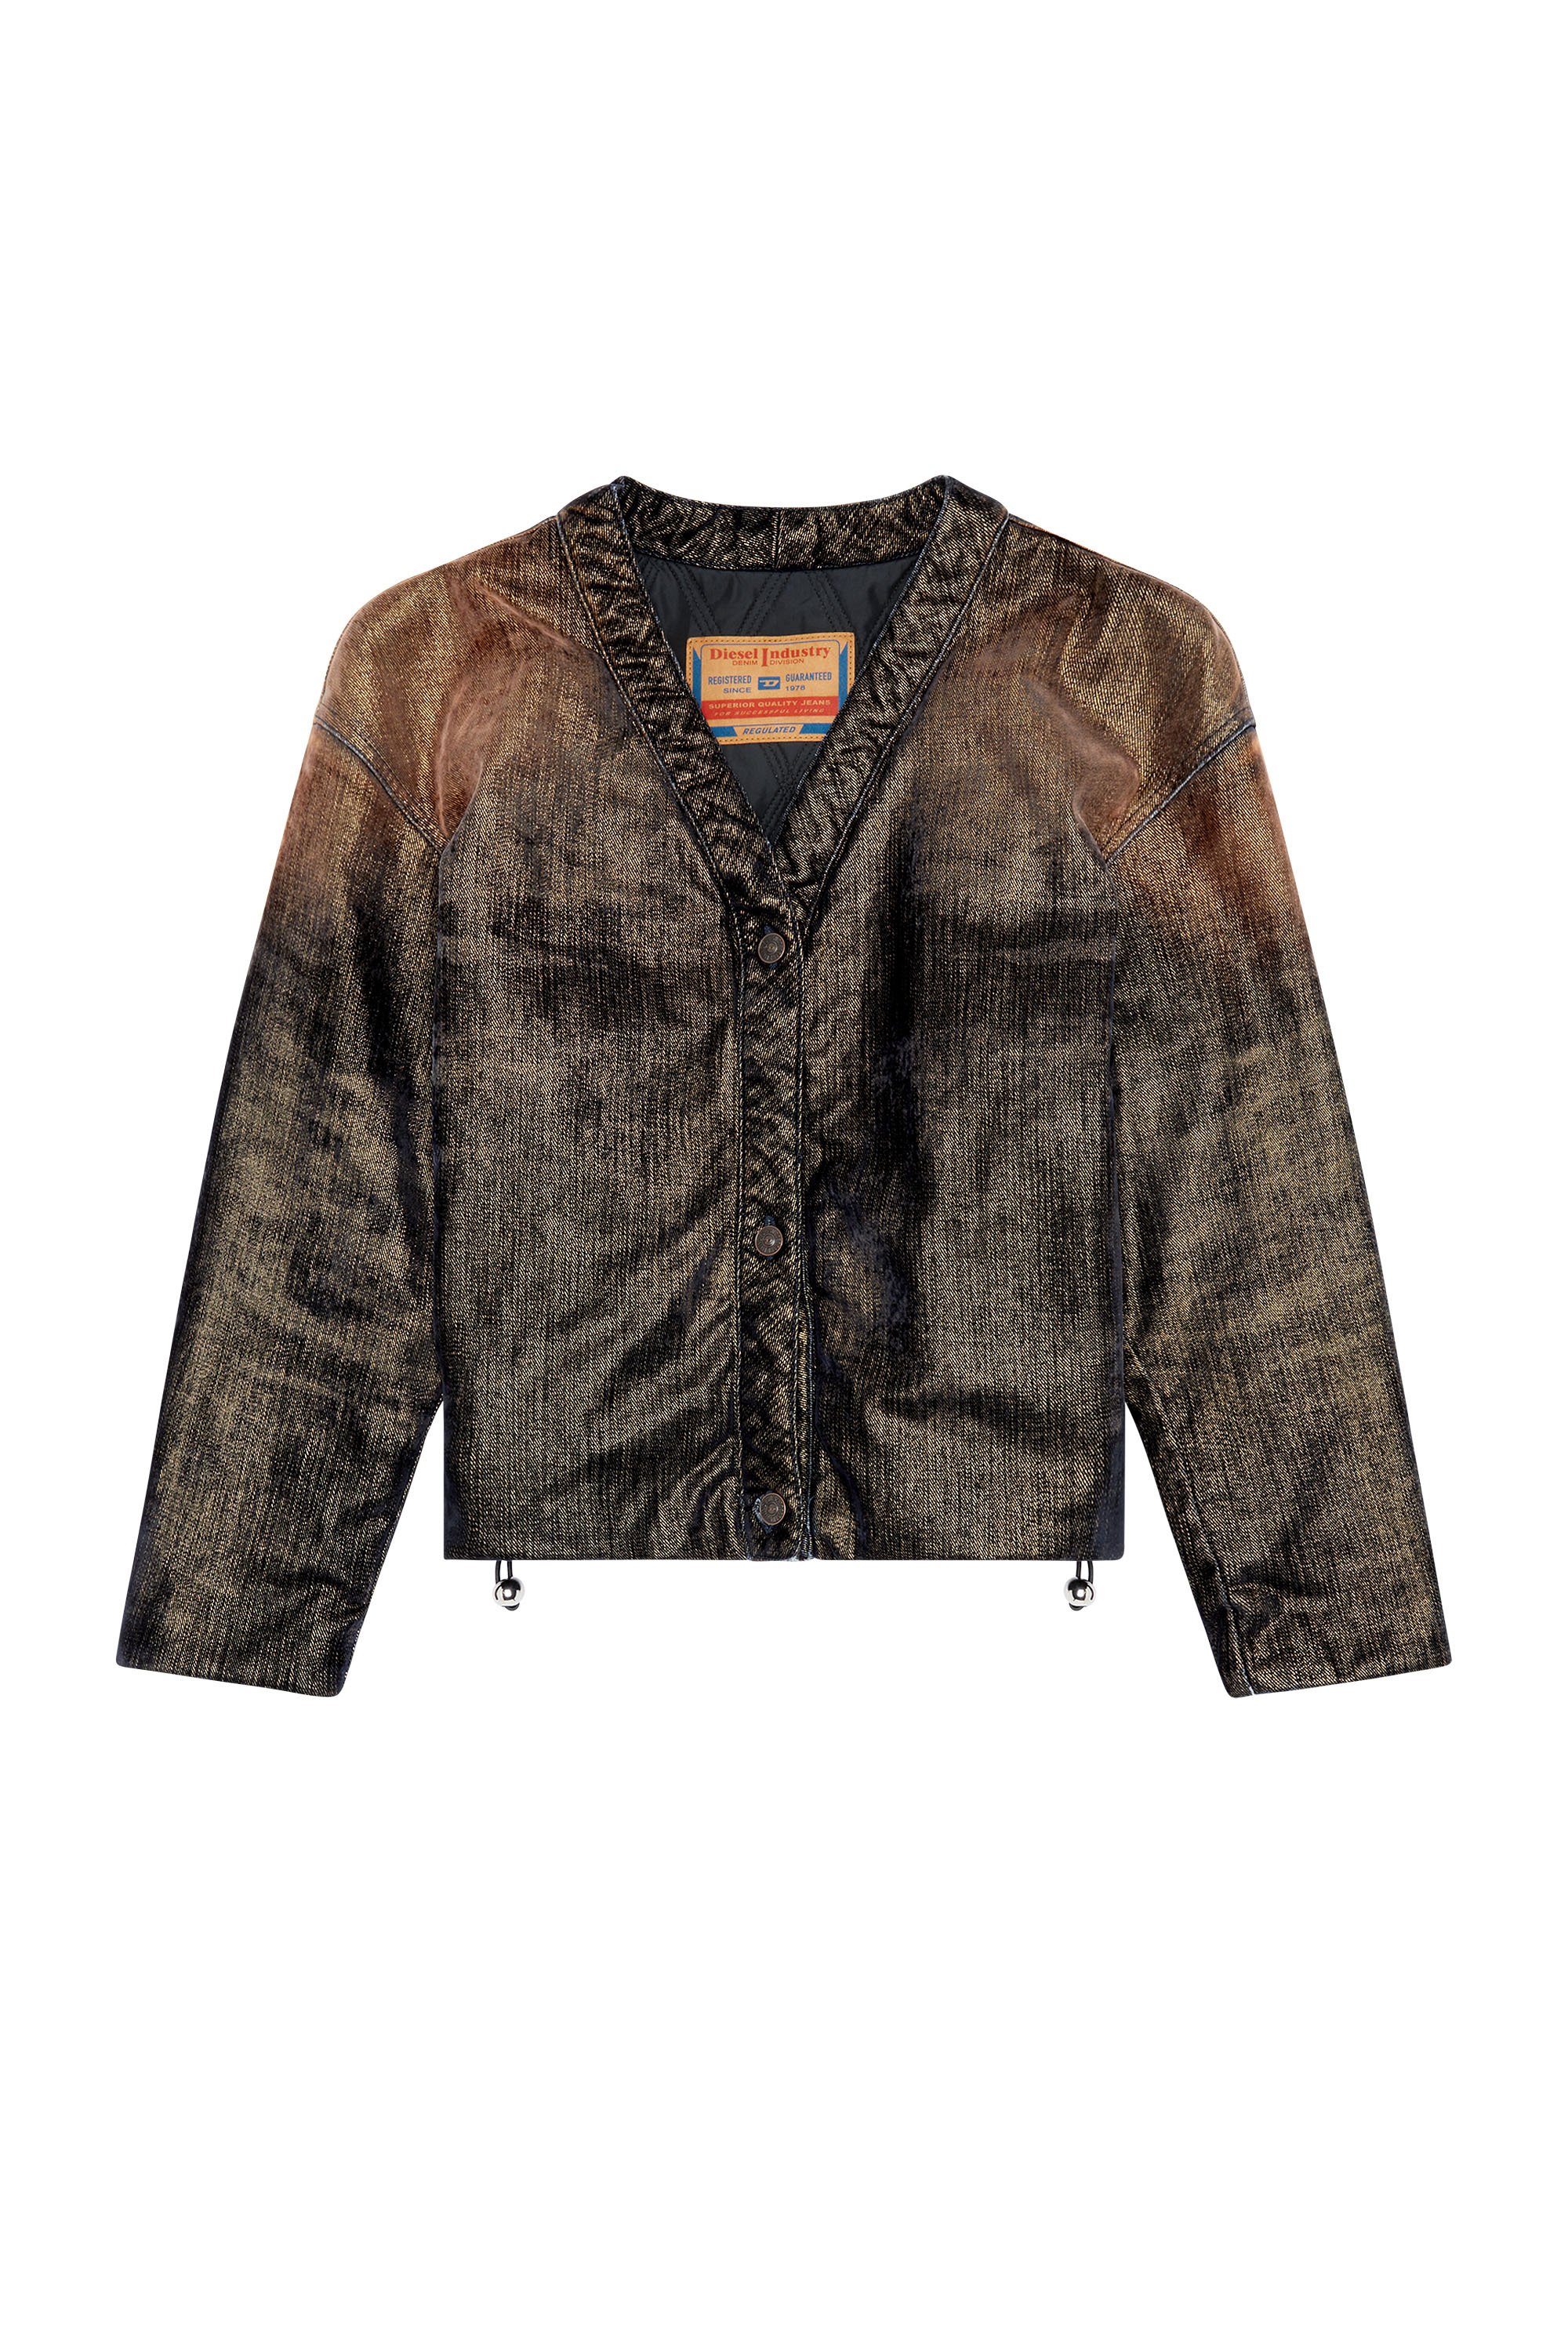 Diesel - DE-CONF-S, Female Jacket in shimmery denim in Multicolor - Image 3